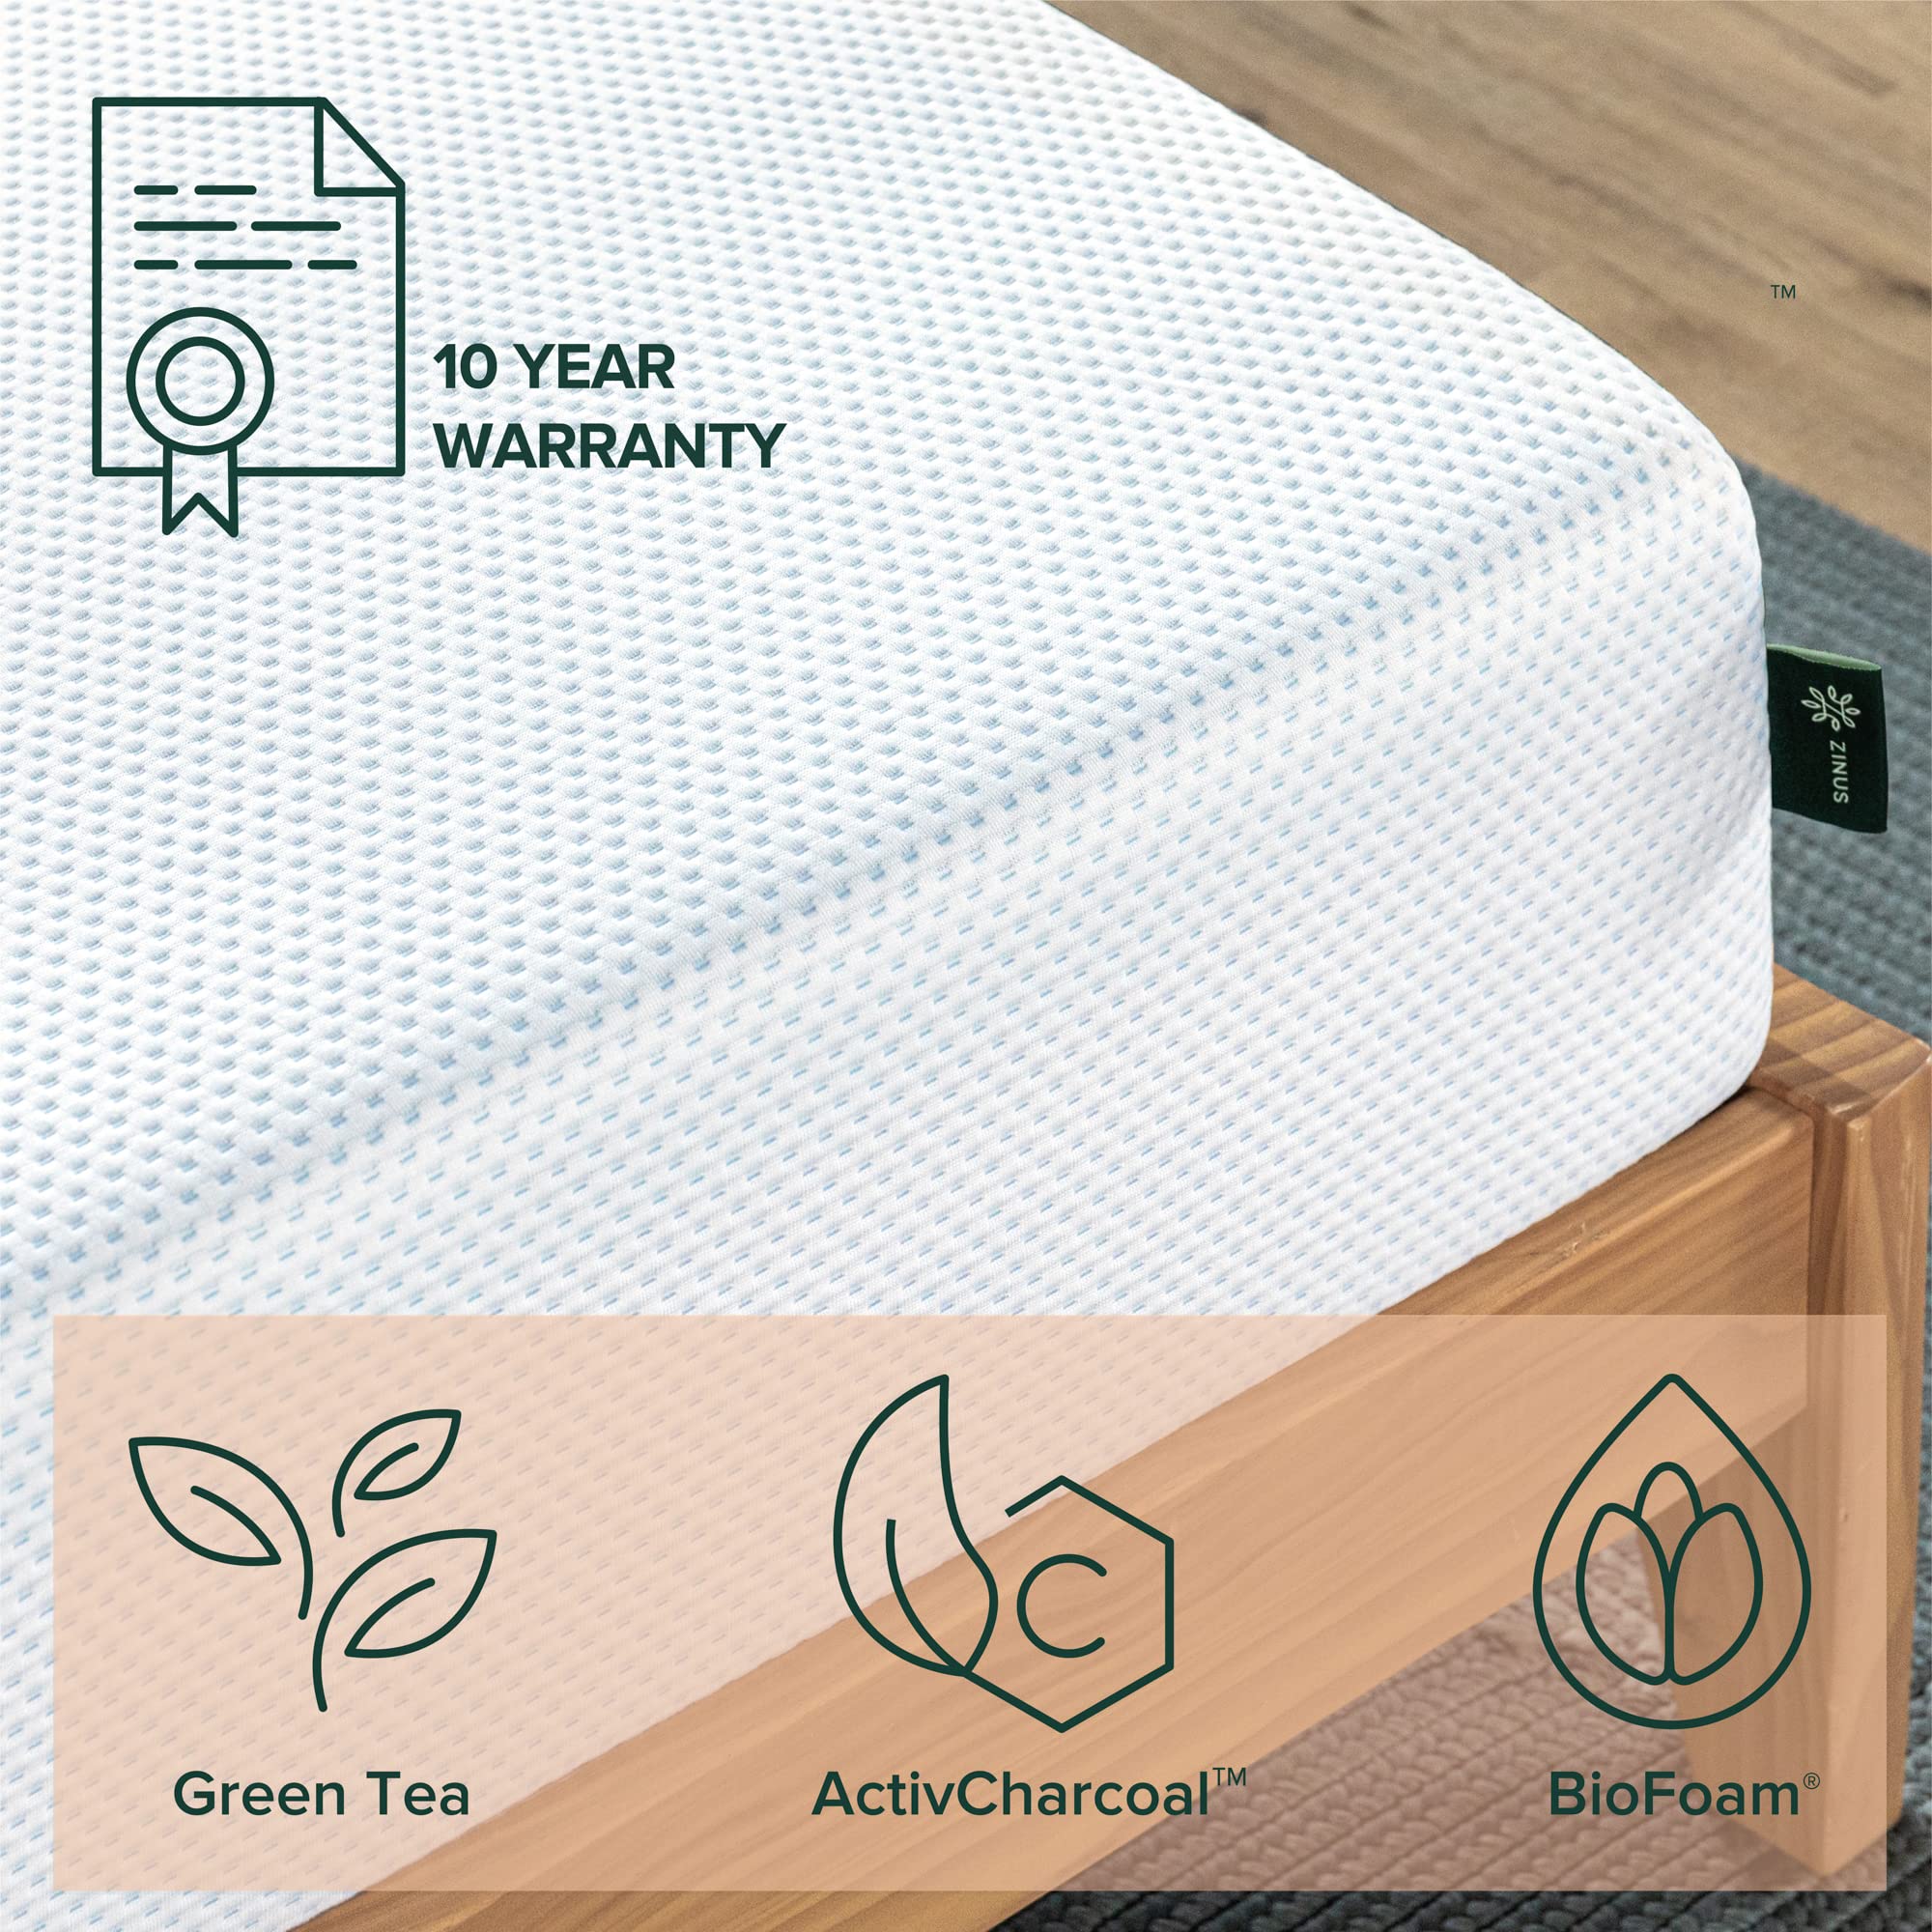 ZINUS 10 Inch Green Tea Cooling Gel Memory Foam Mattress / Cooling Gel Foam / Pressure Relieving / CertiPUR-US Certified / Bed-in-a-Box, Full, White